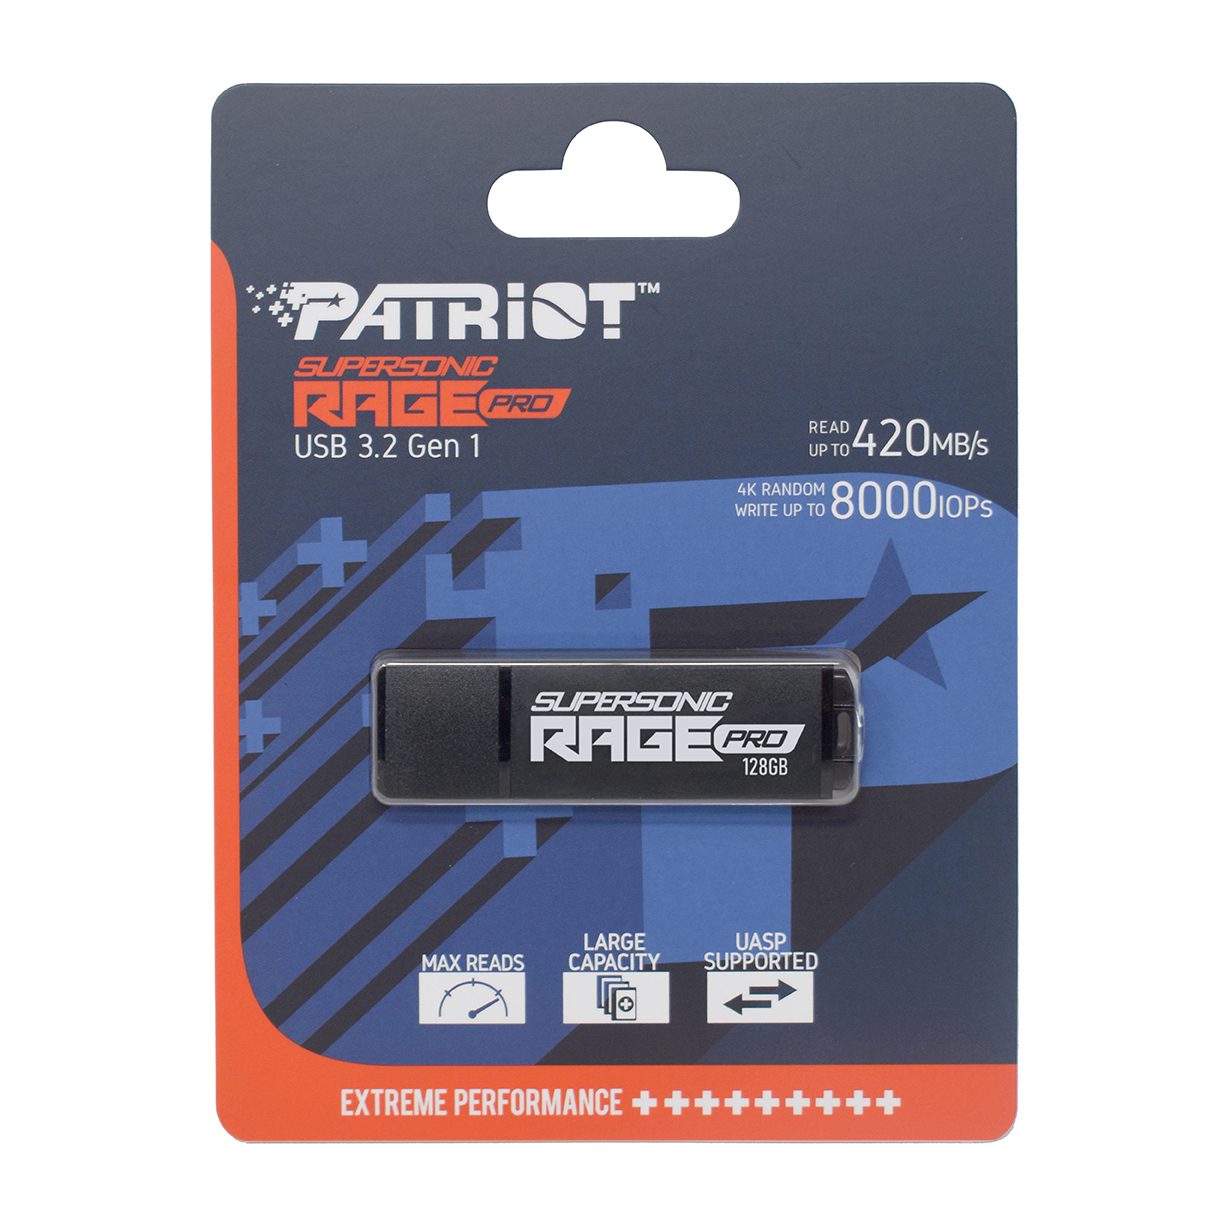 PATRIOT prezentuje Supersonic Rage Pro USB 3.2 Gen. 1